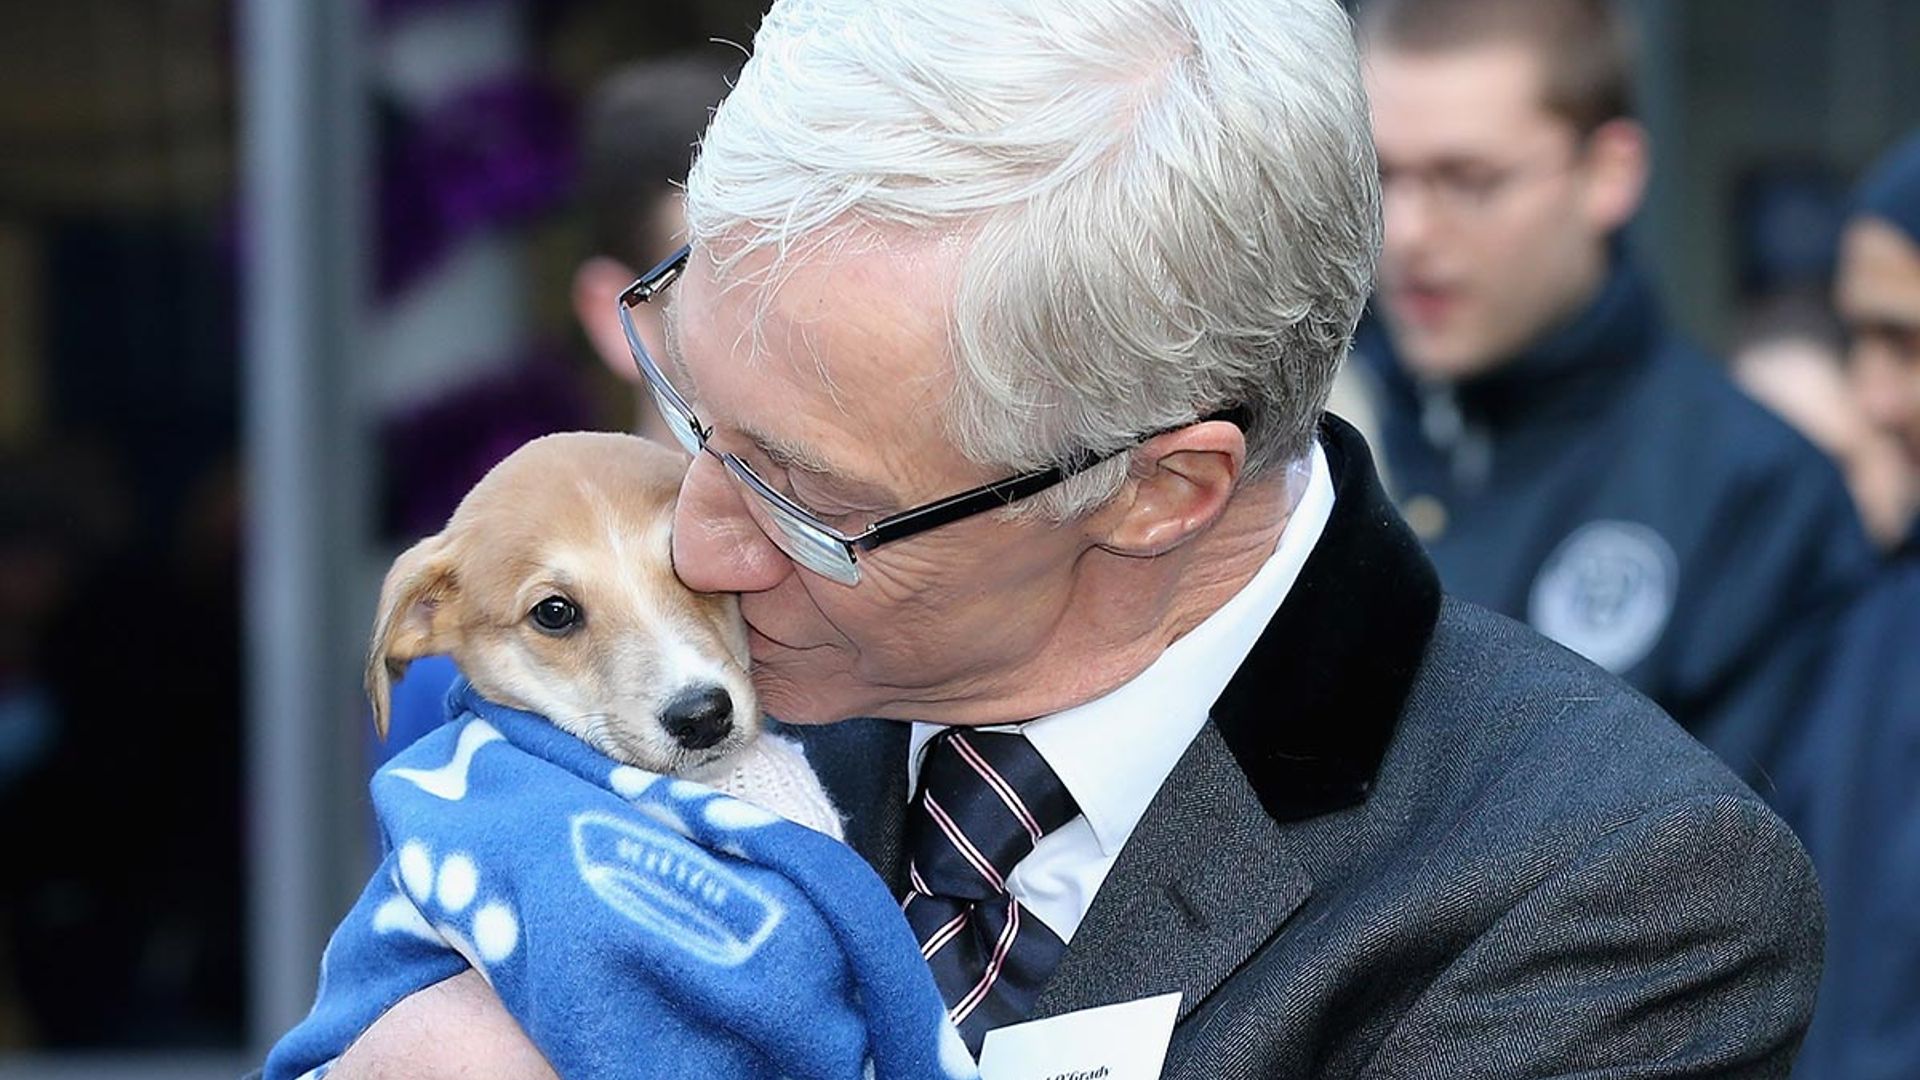 Paul O'Grady announces the tragic news that his pet dog has died